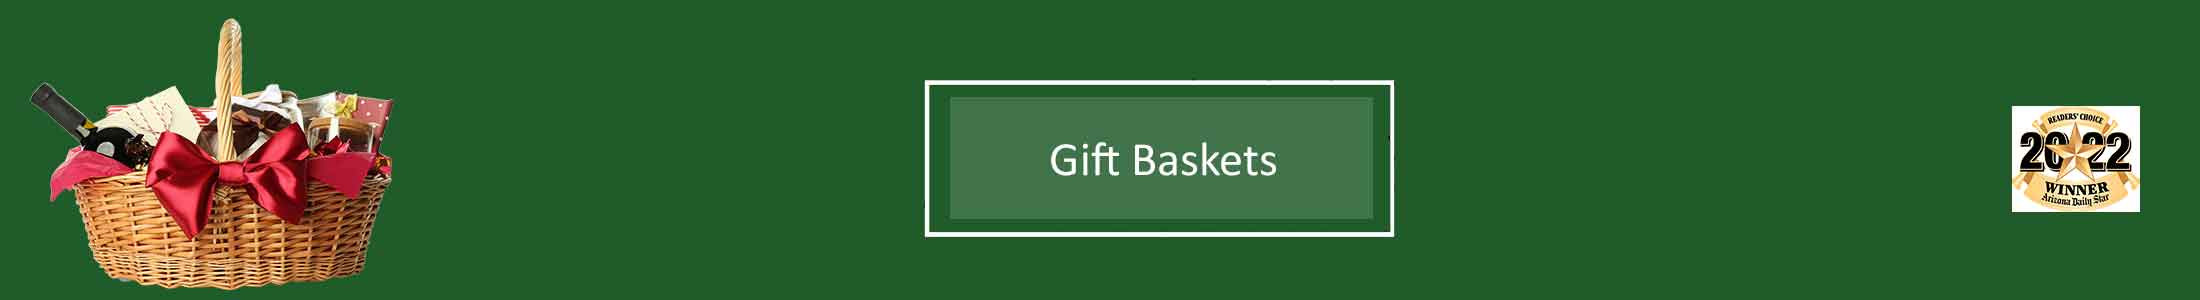 Gift Baskets, Gourmet Gift Basket